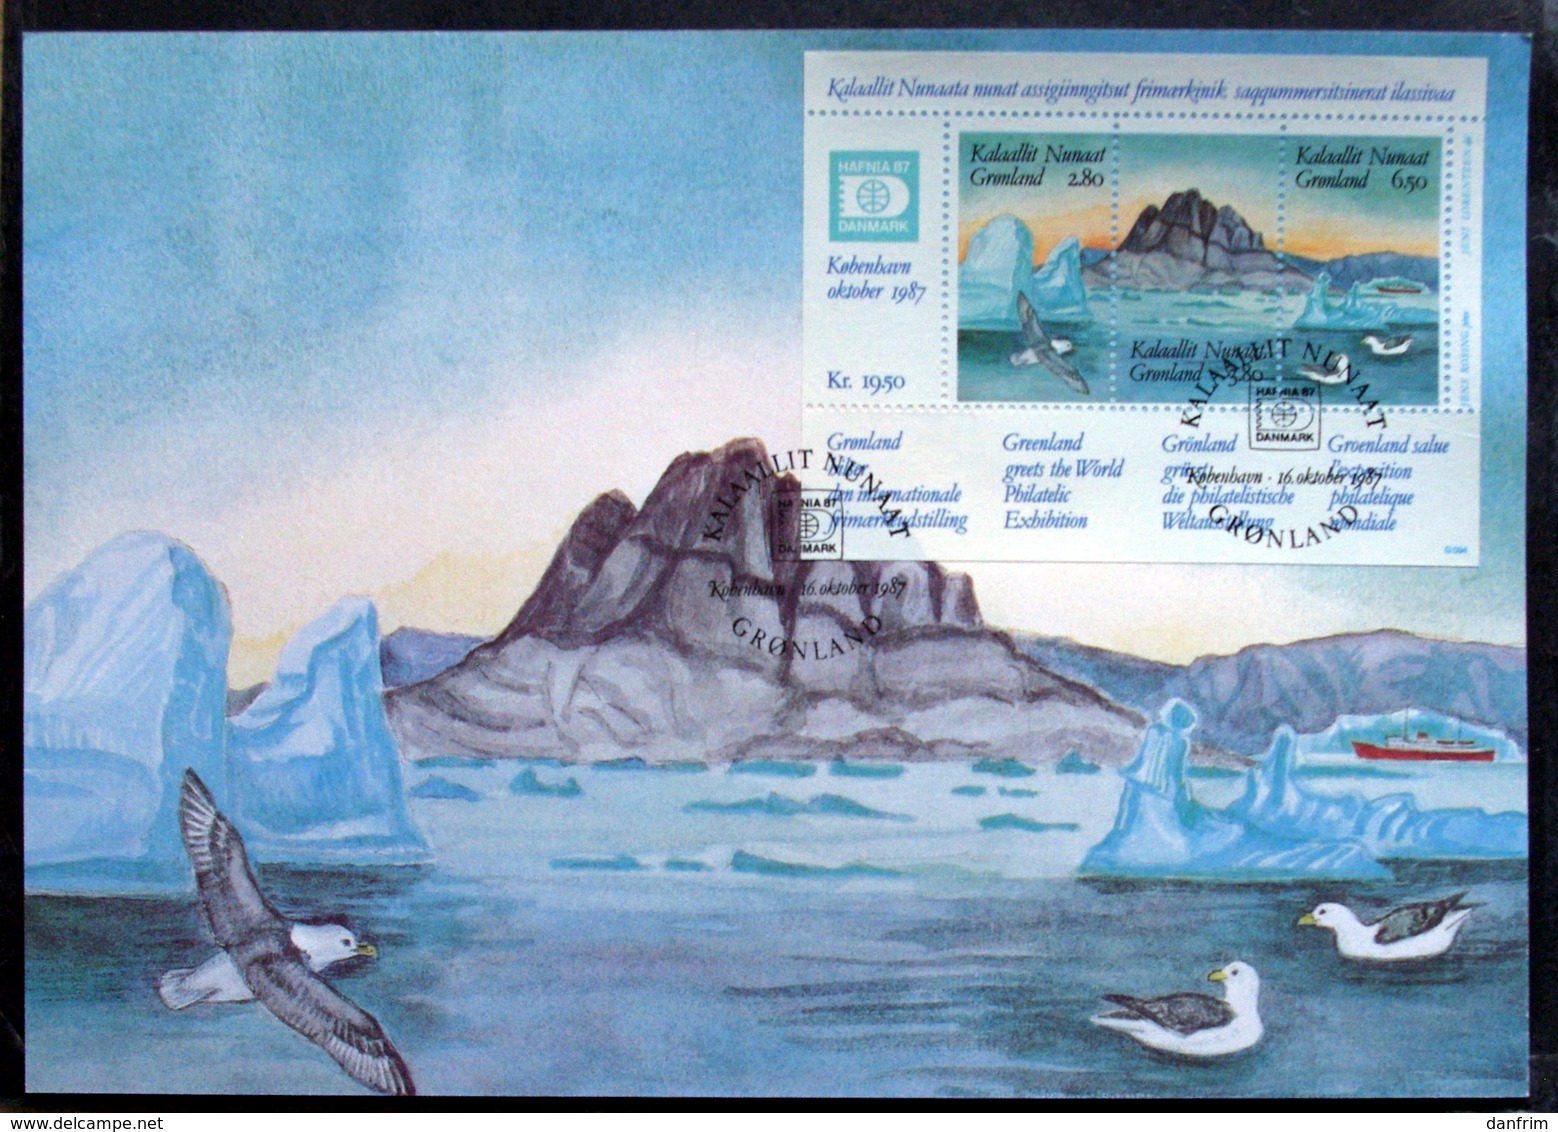 Greenland 1987     MiNr.169-71  Block 1    CARDS Frimærker I Forum 16-10-1987  ( Lot 6631) - Covers & Documents